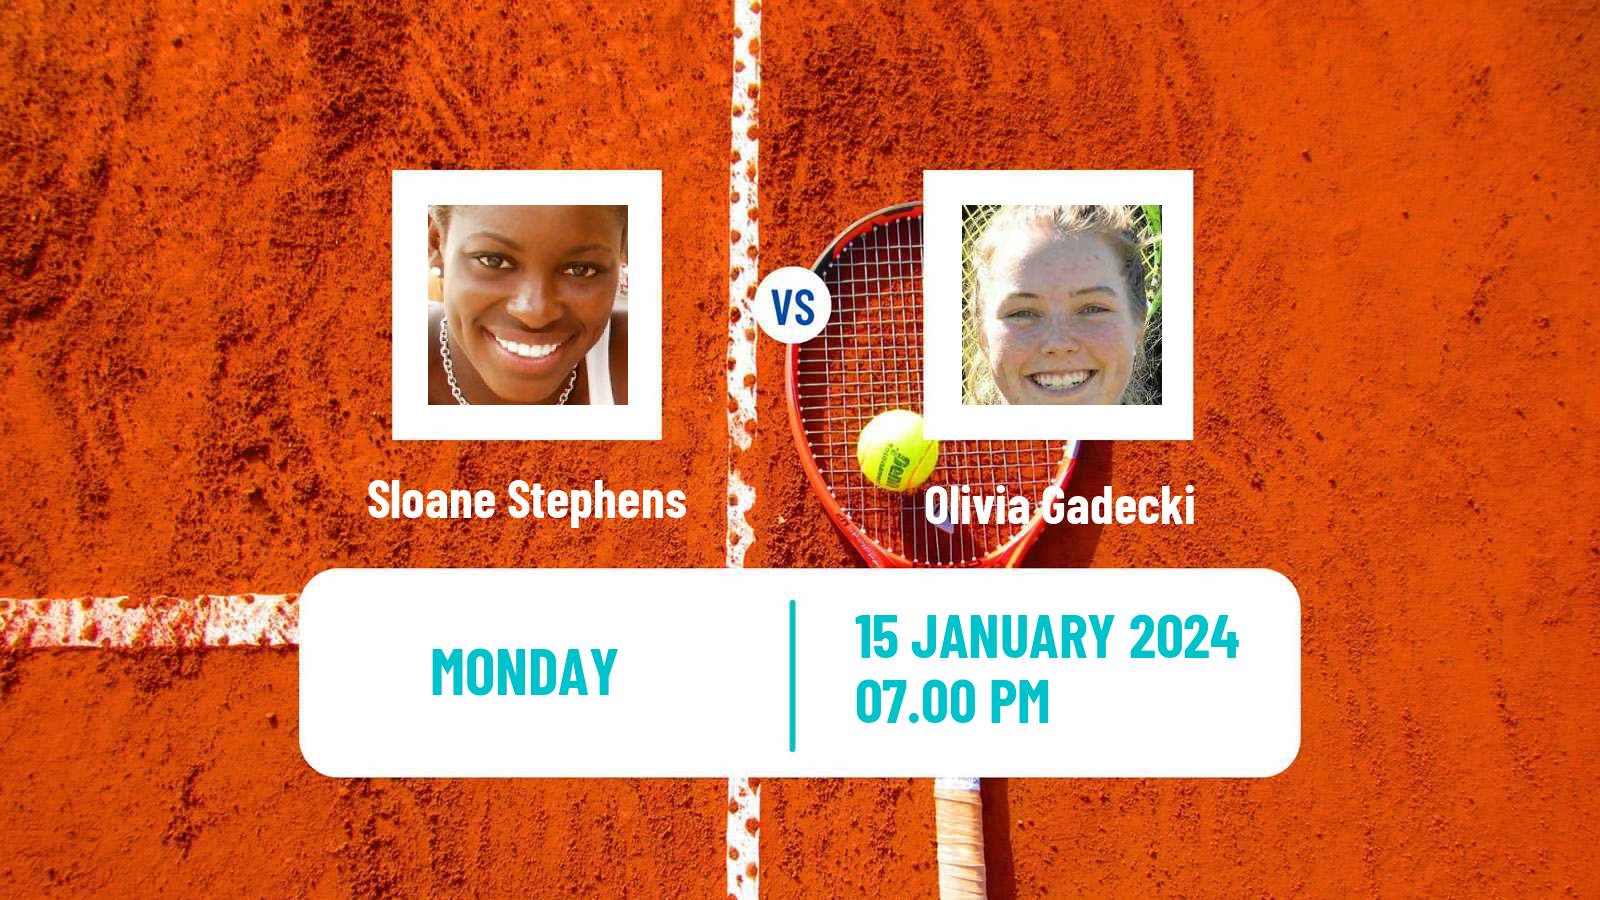 Tennis WTA Australian Open Sloane Stephens - Olivia Gadecki